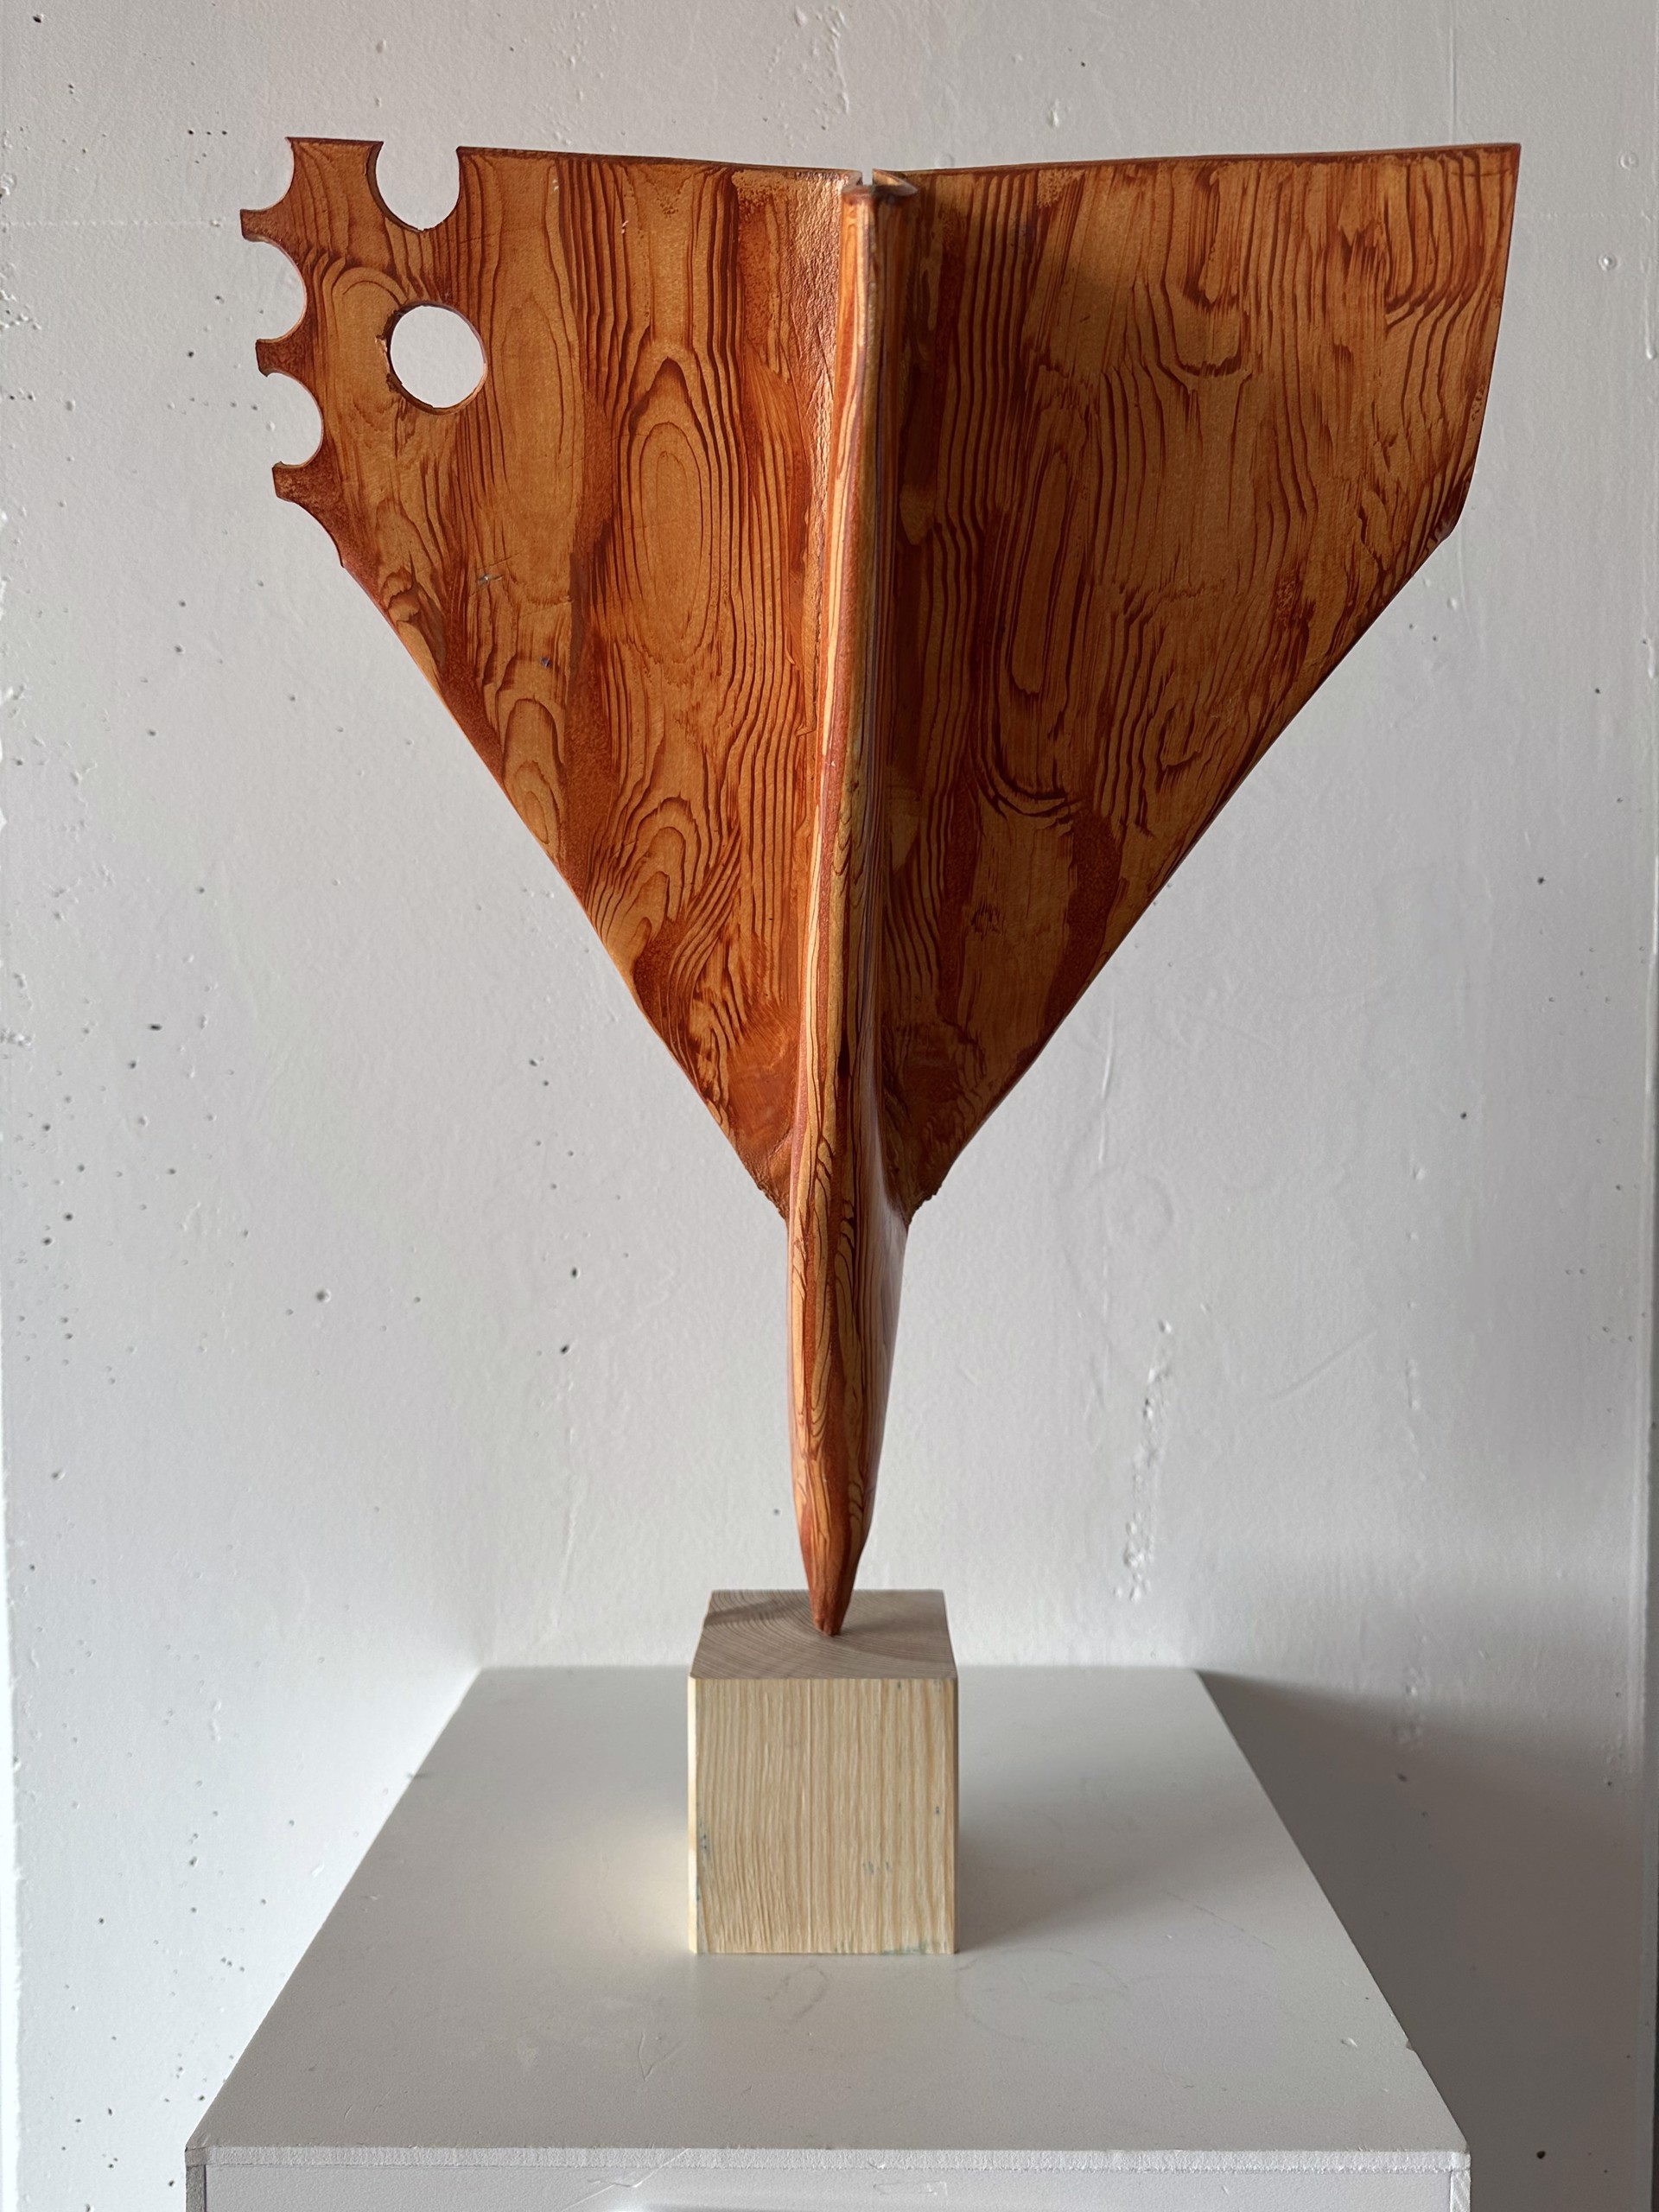 Wooden Paper planes by Johannes Ehemann